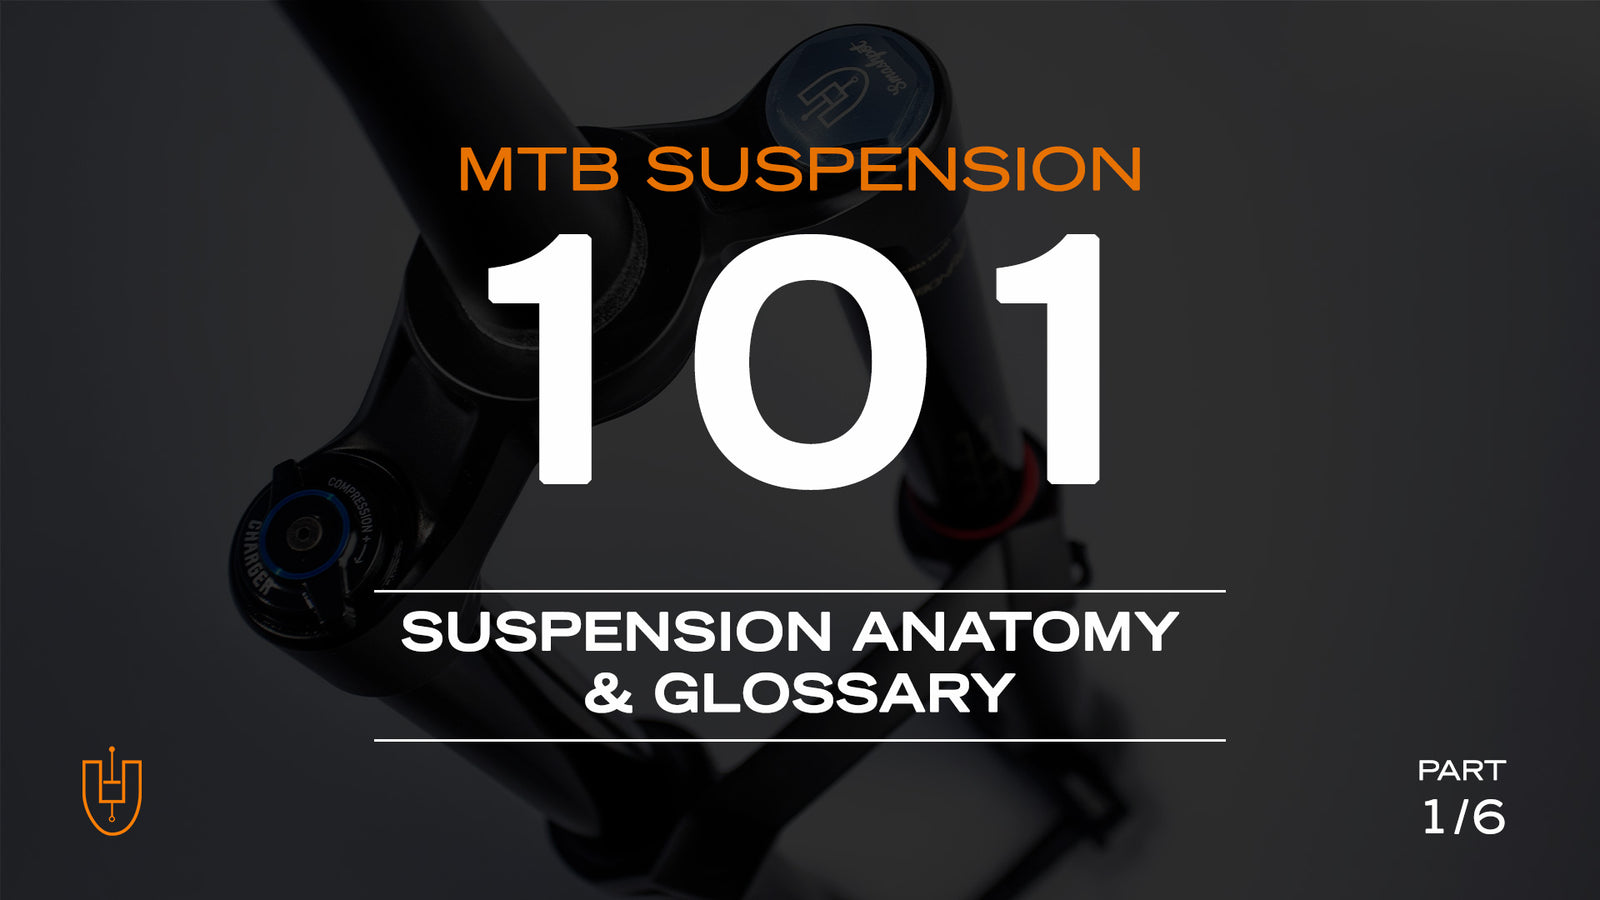 MOUNTAIN BIKE SUSPENSION 101: Suspension Anatomy & Glossary (Part 1 of 6)